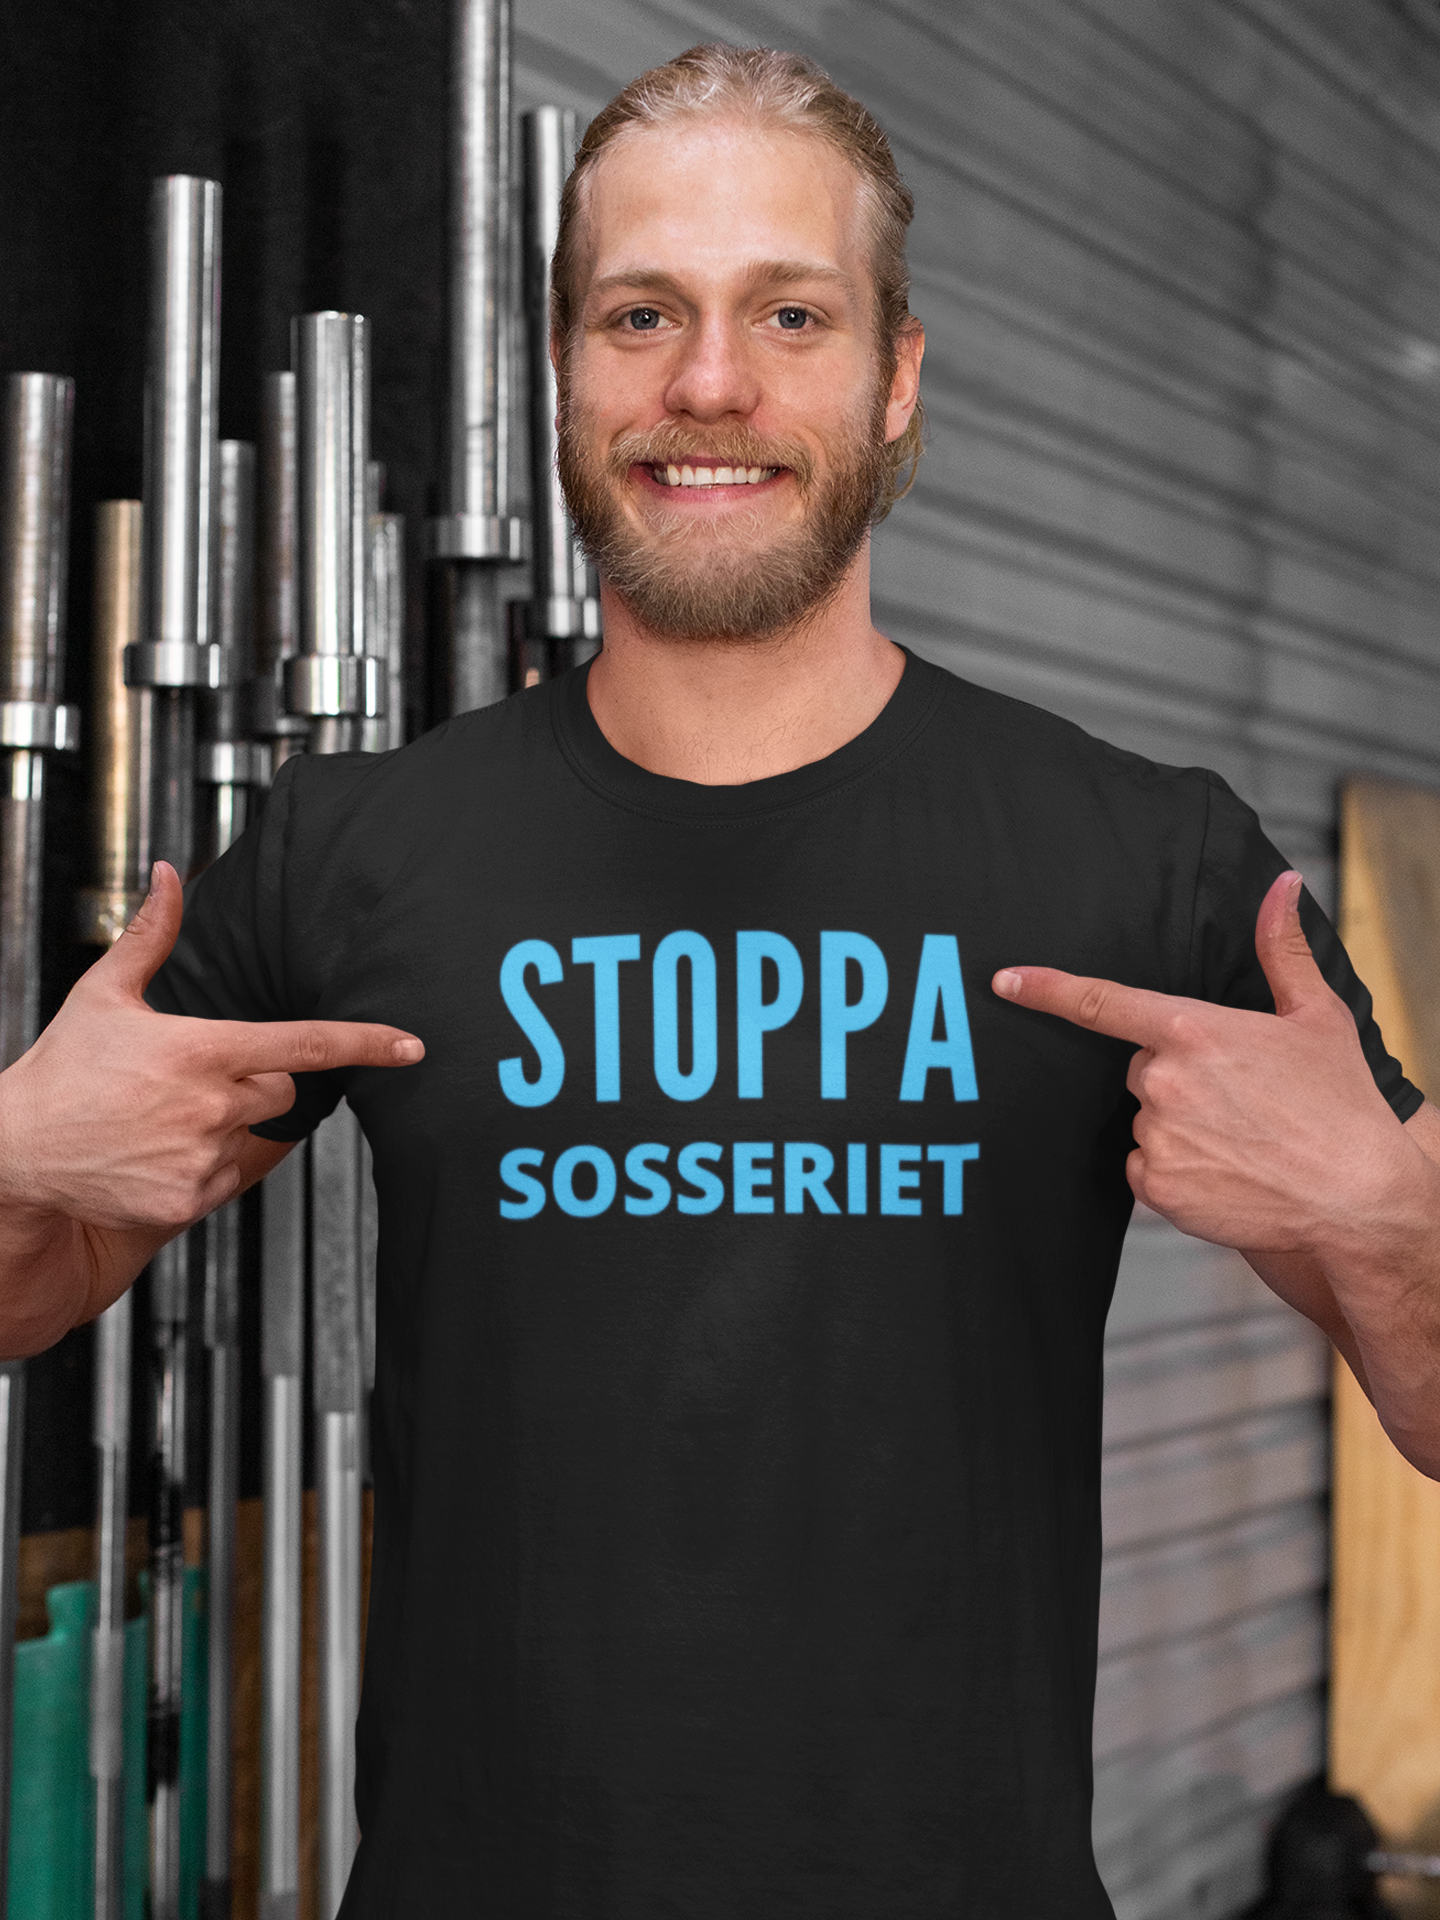 Stoppa Sosseriet T-Shirt, Tshirt Herr Stoppa Sosseriet, Anti Socialdemokrat, Tshirt Politik